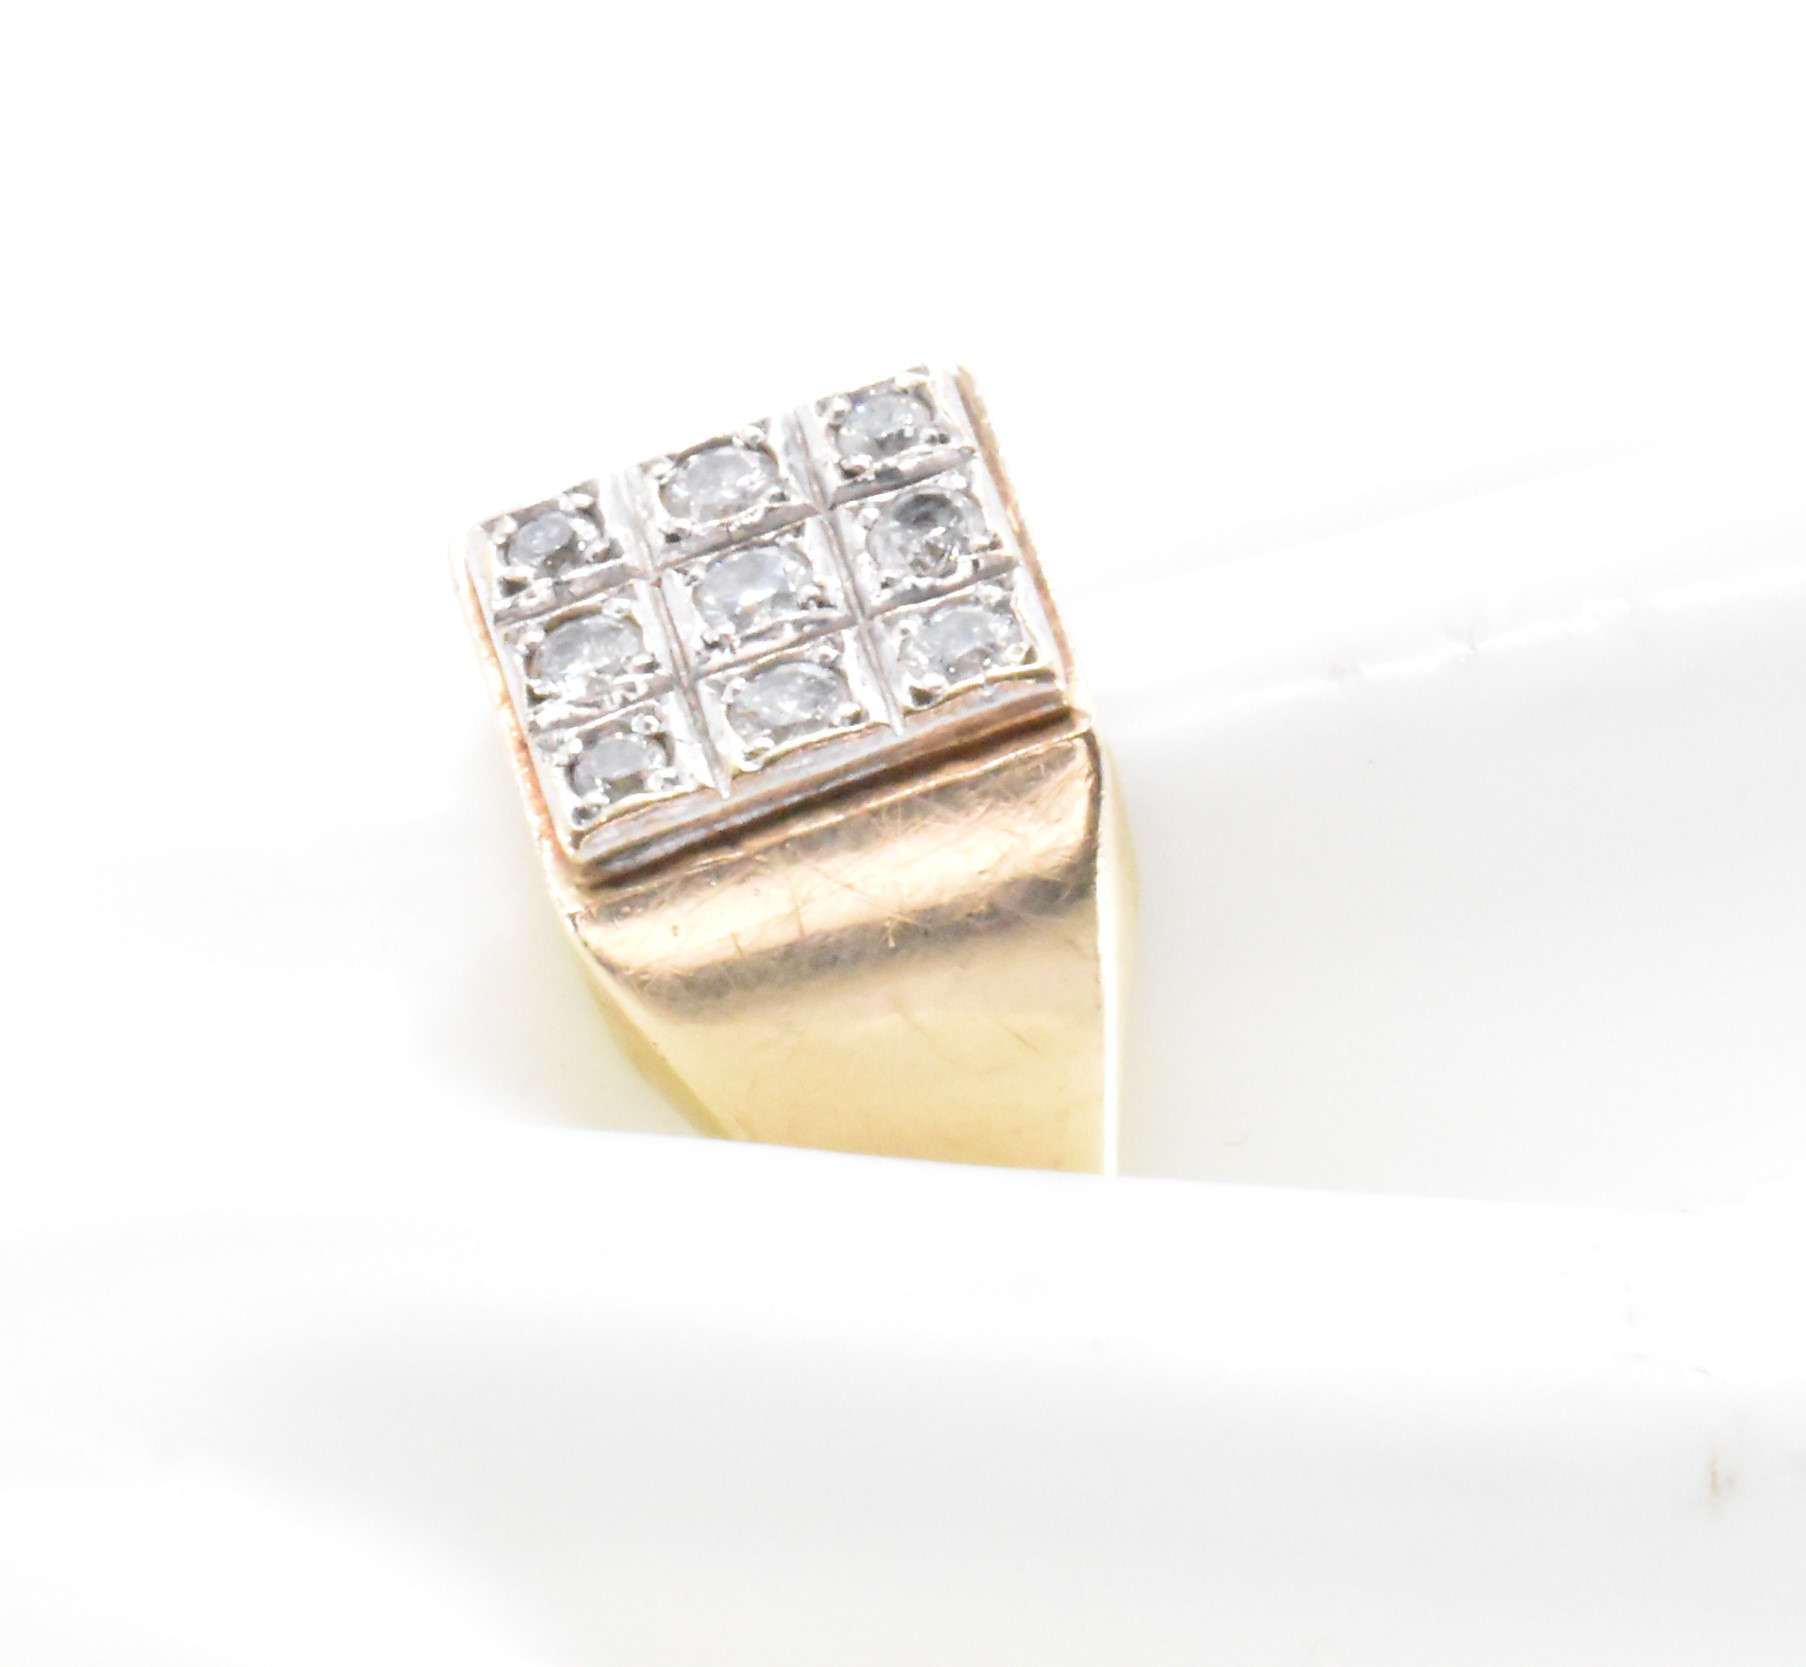 HALLMARKED 9CT GOLD & DIAMOND SIGNET RING - Image 4 of 5